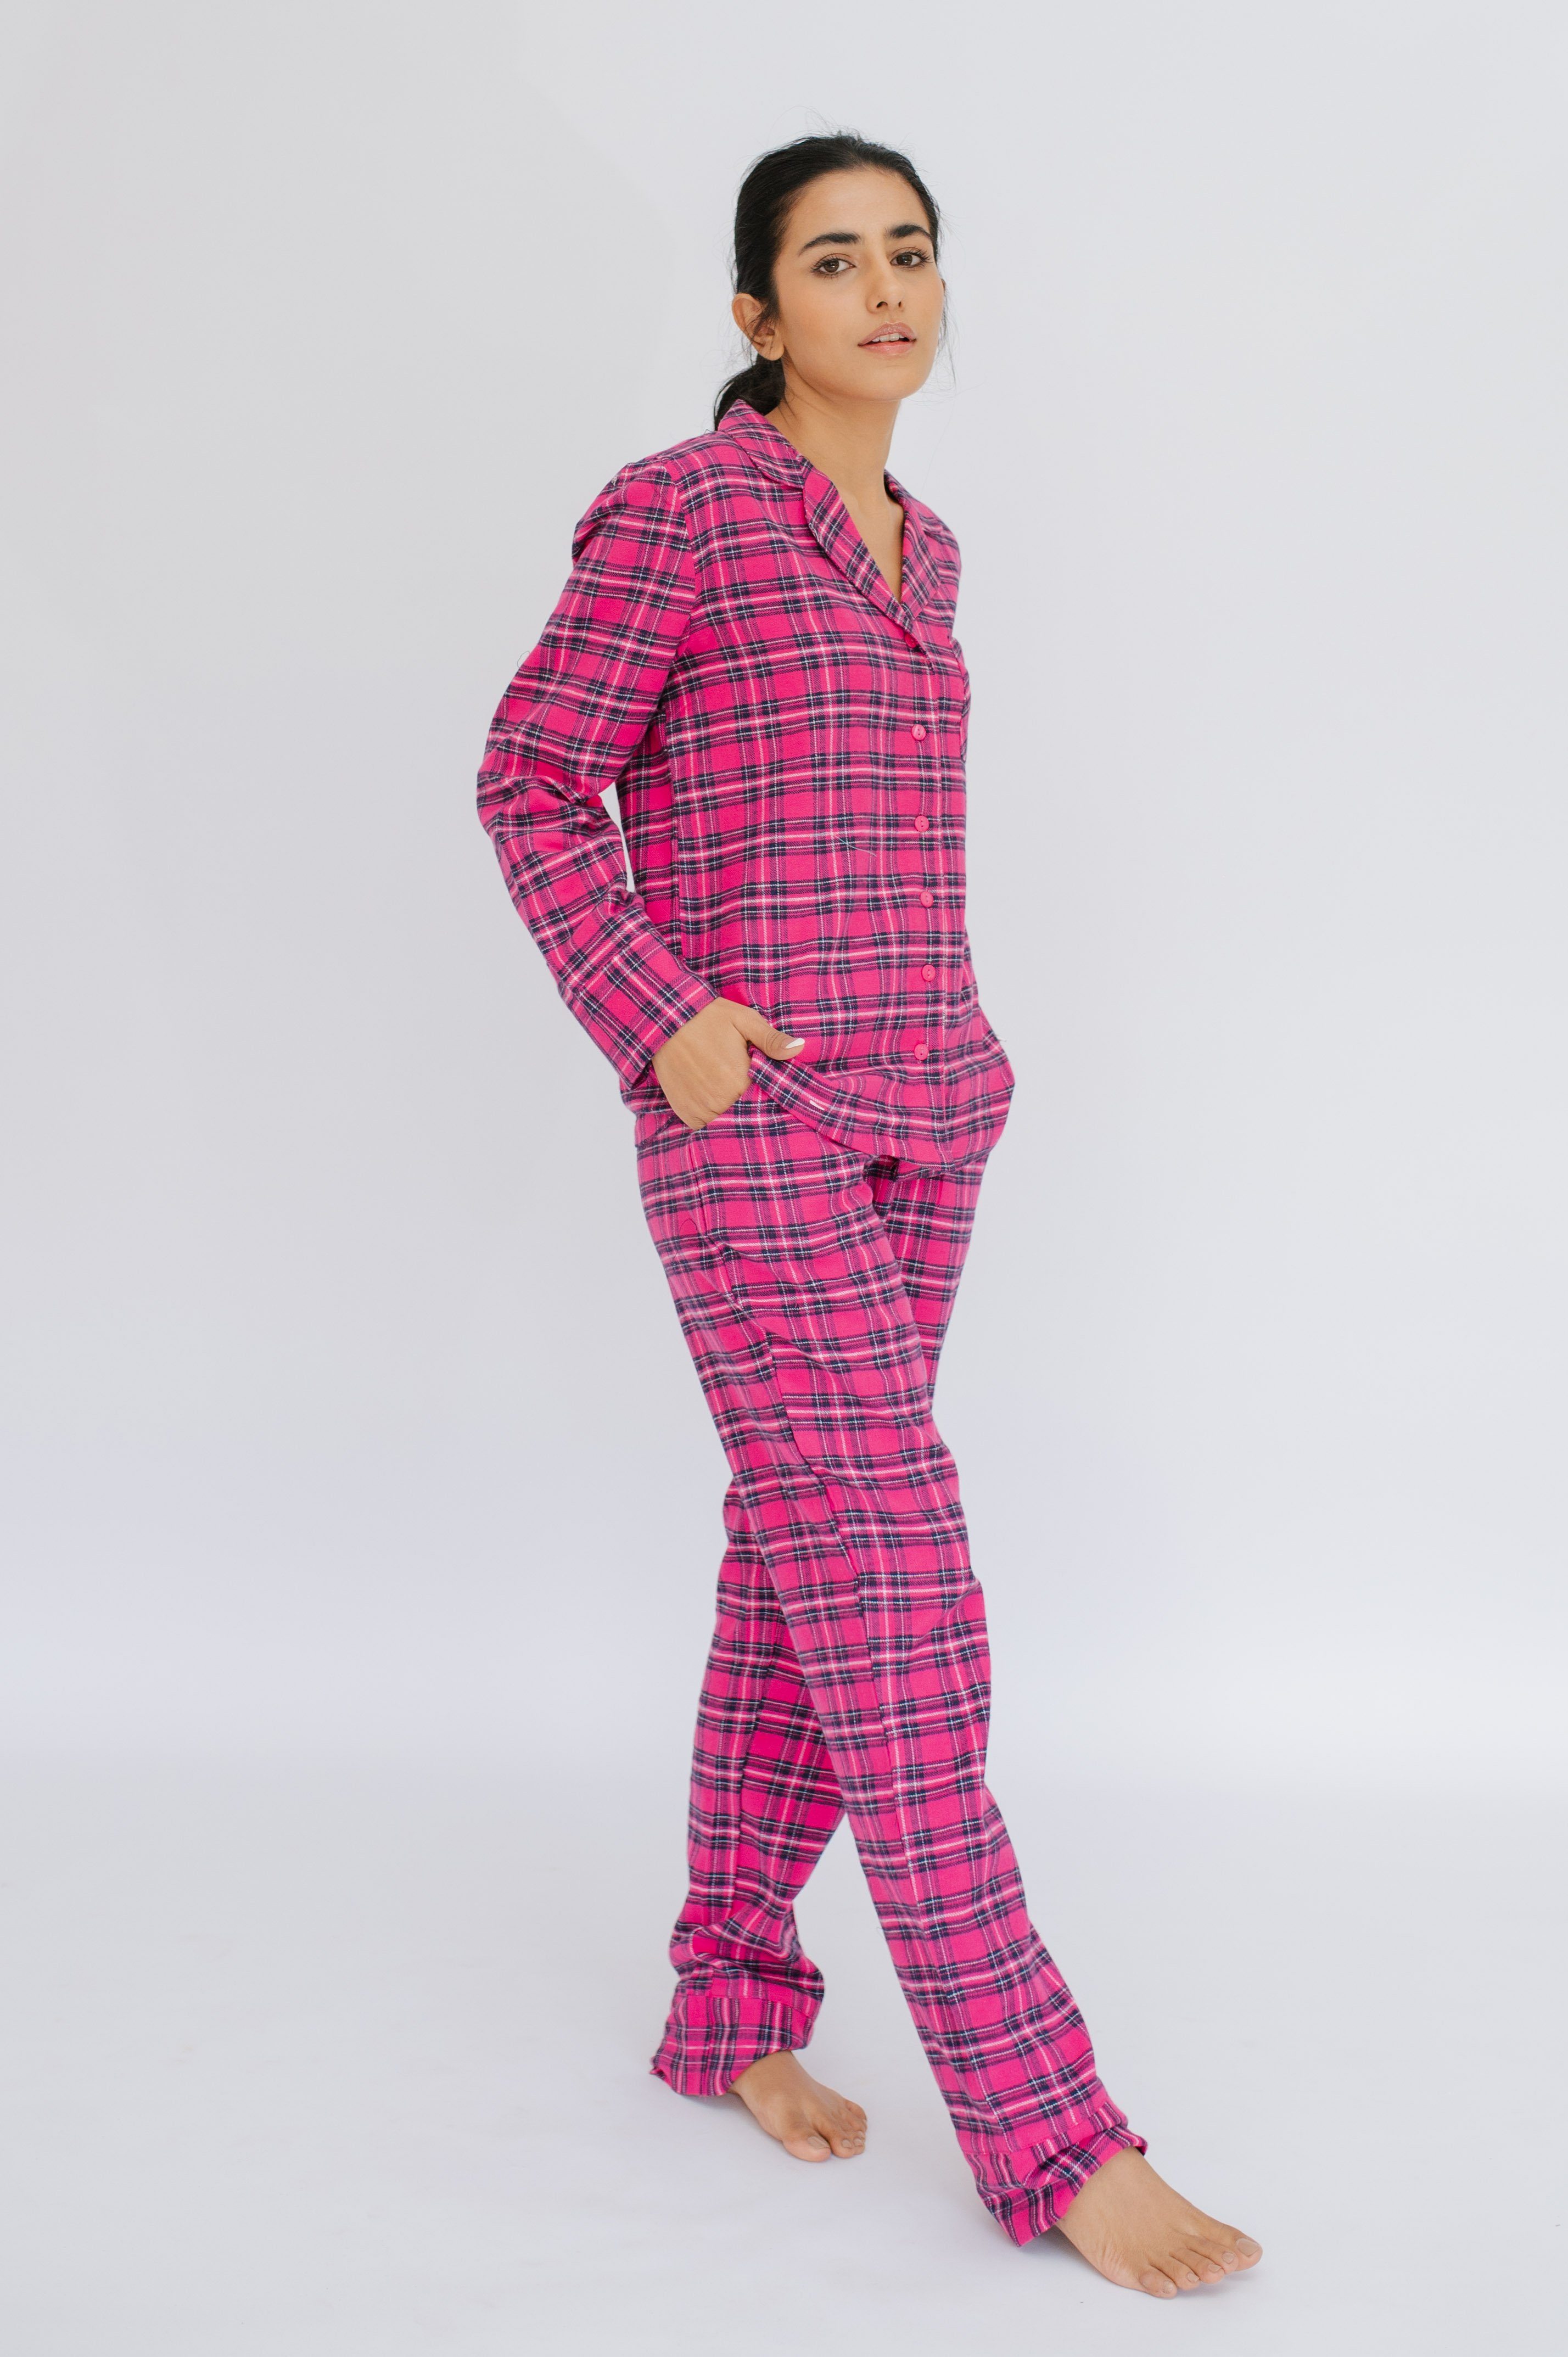 SNOOZE OFF Pyjama Schlafanzug in fuchsia-blauem Karomuster (2 tlg., 1 Stück)  mit Kontrastpaspel-Details